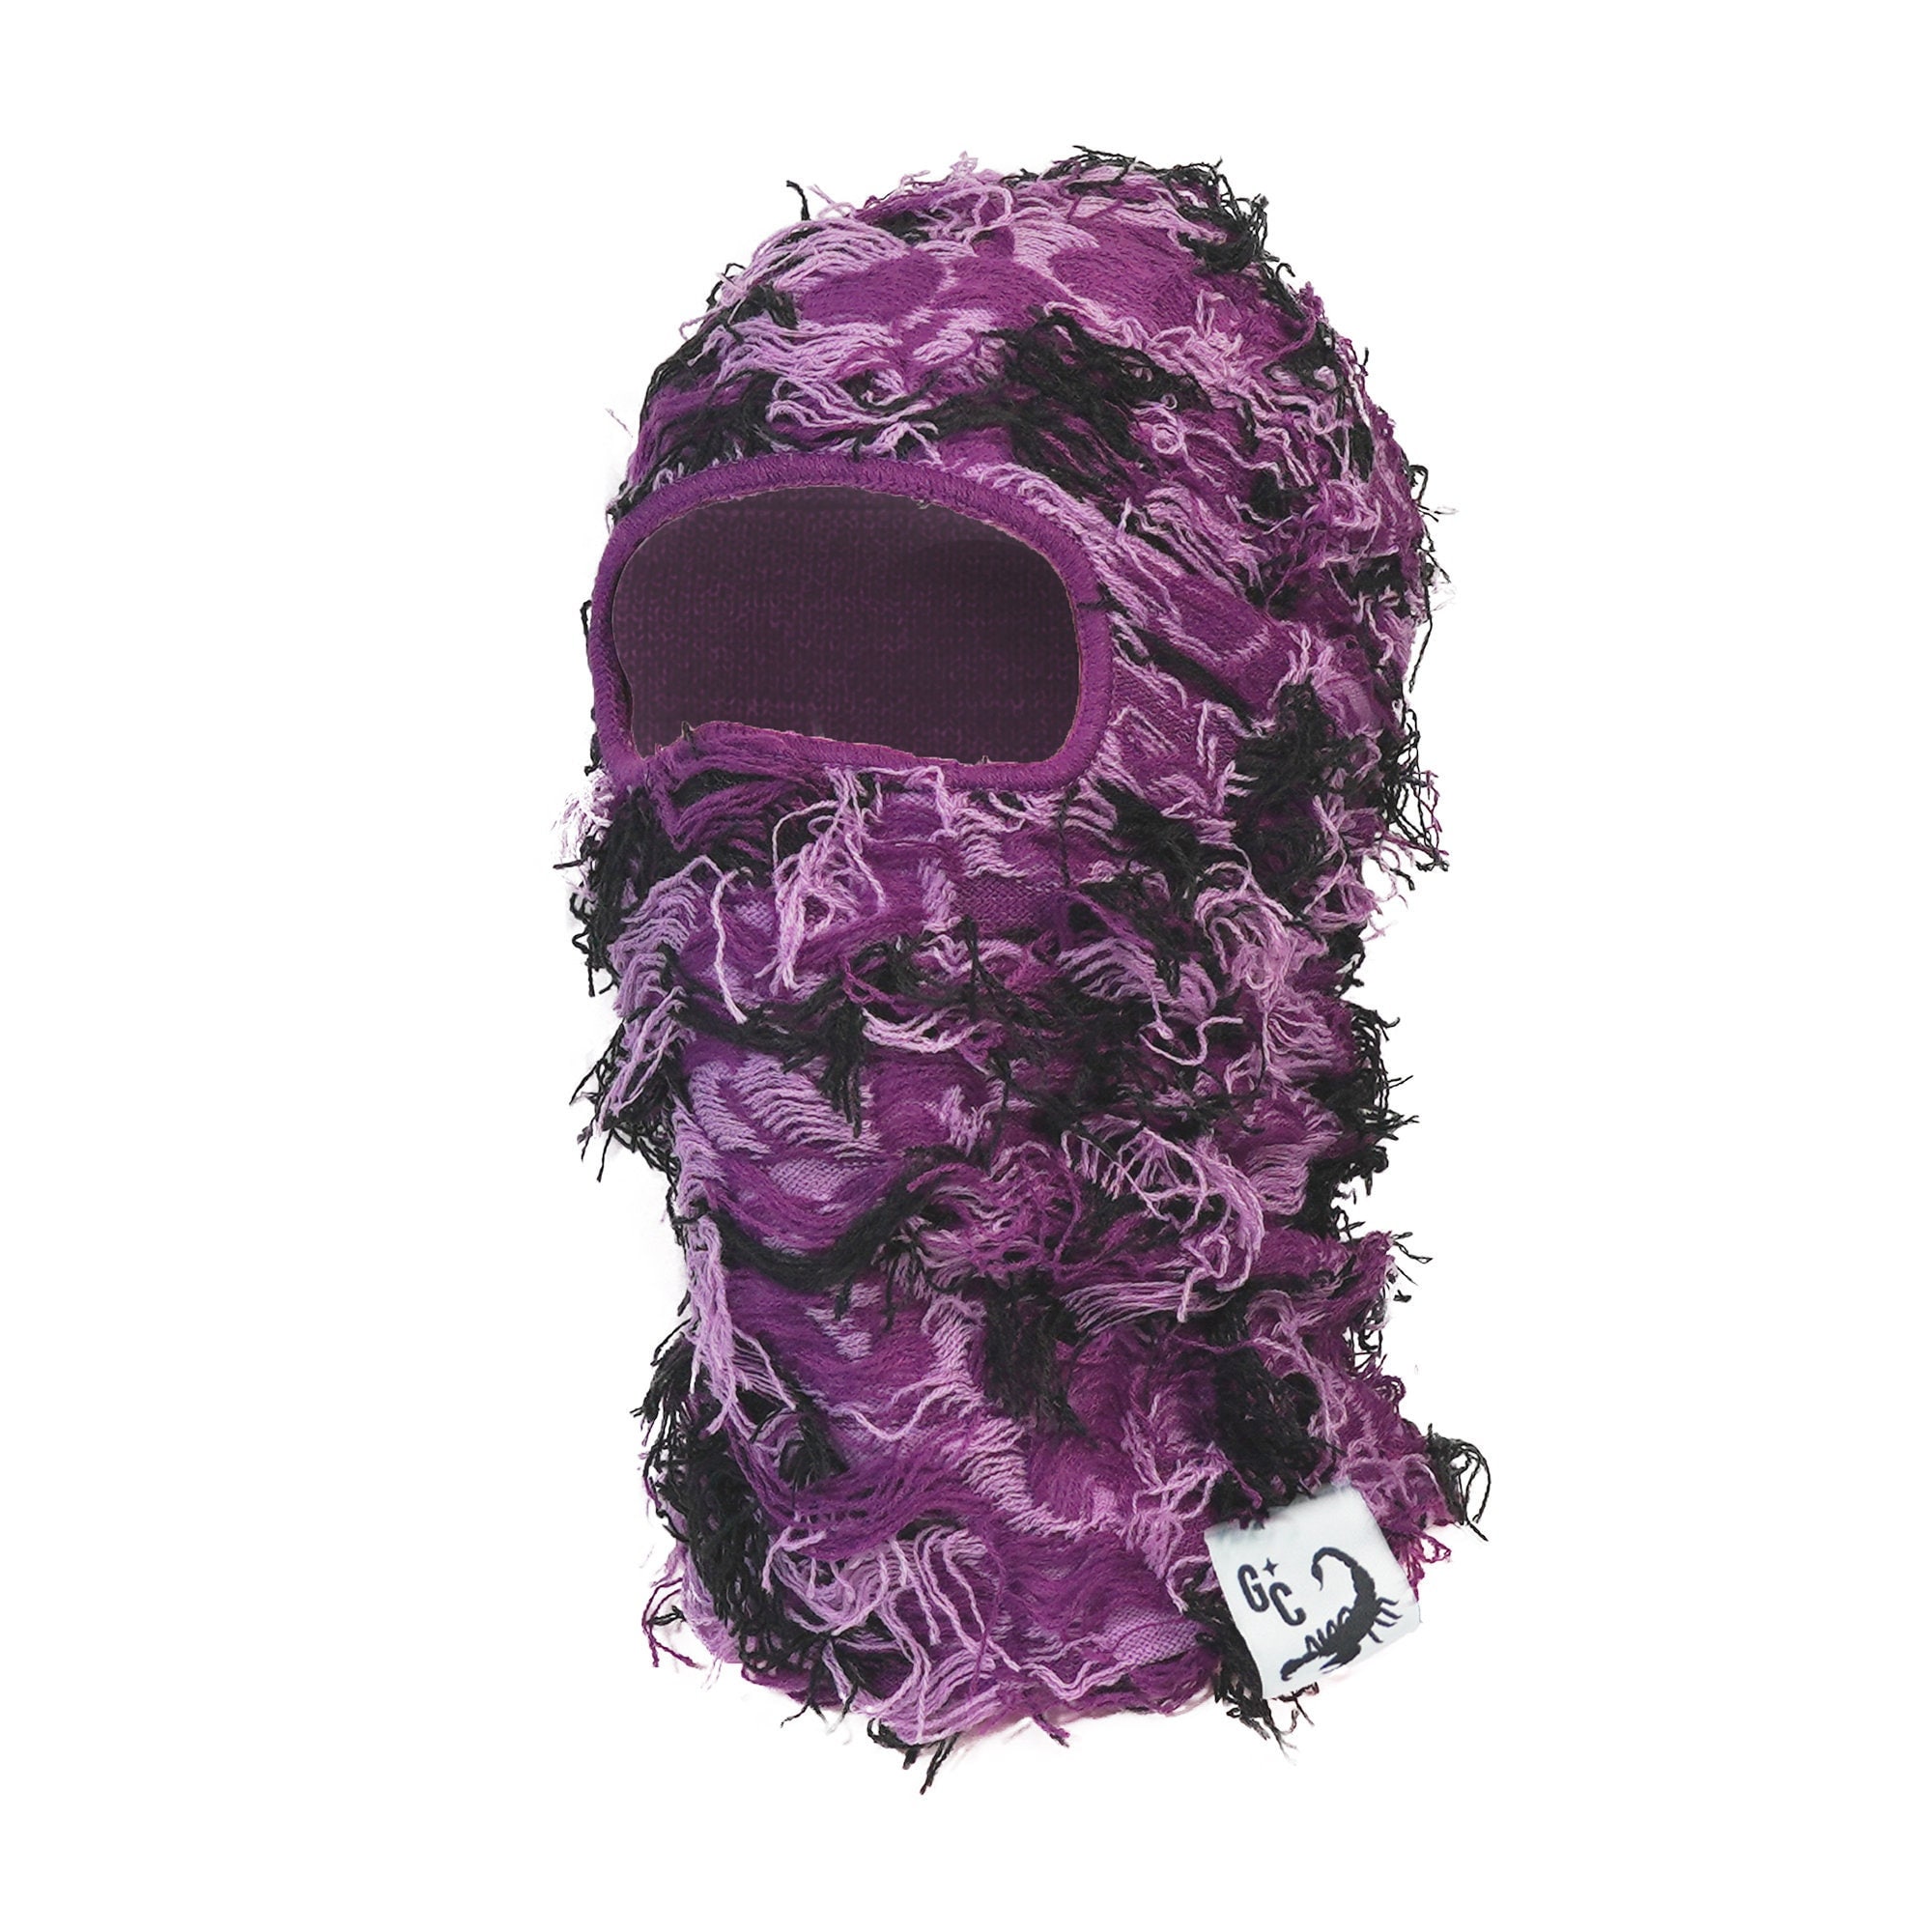 Buy Fleece Lined Ski Mask at Mighty Ape NZ